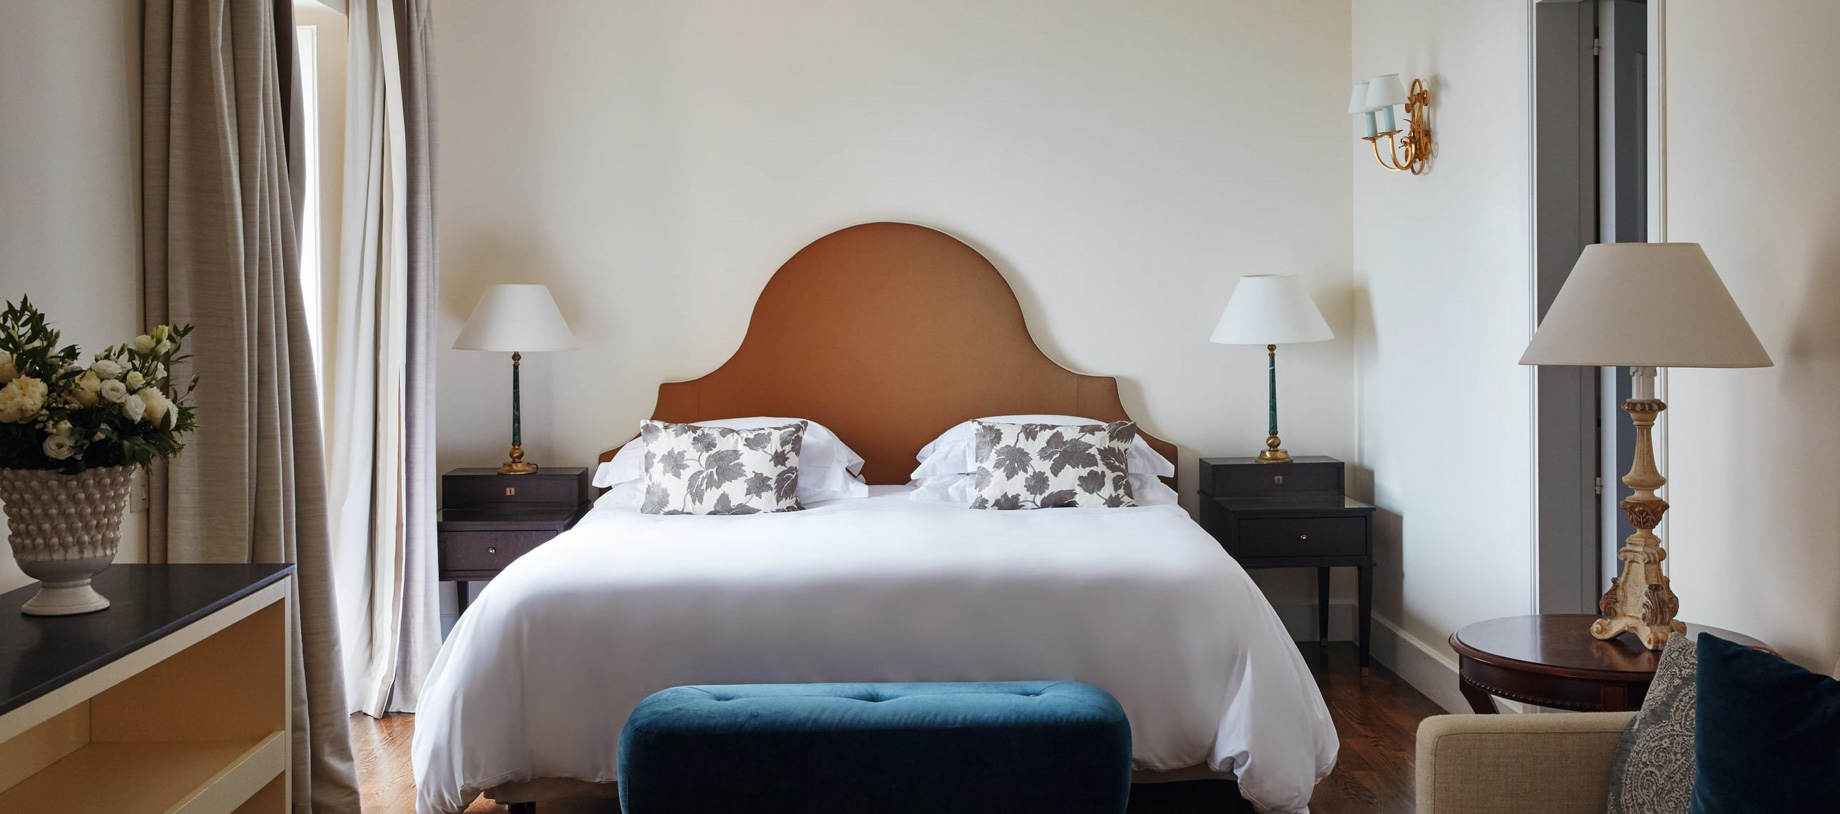 136 – Grand Hotel Timeo, A Belmond Hotel – Taormina, Italy – Junior Suite